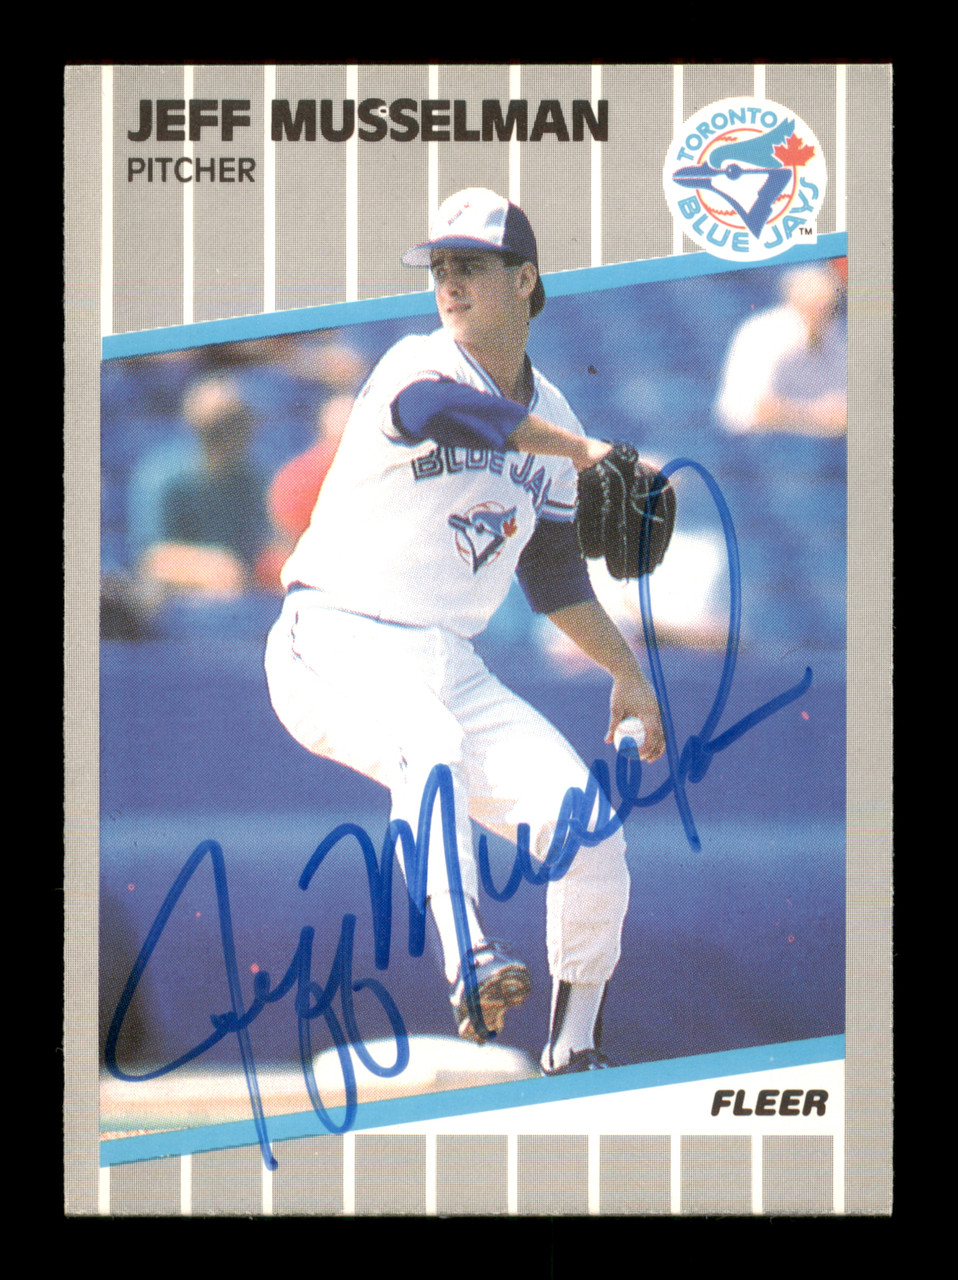 Mookie Wilson Autographed 1991 Fleer Ultra Card #372 Toronto Blue Jays SKU  #183504 - Mill Creek Sports